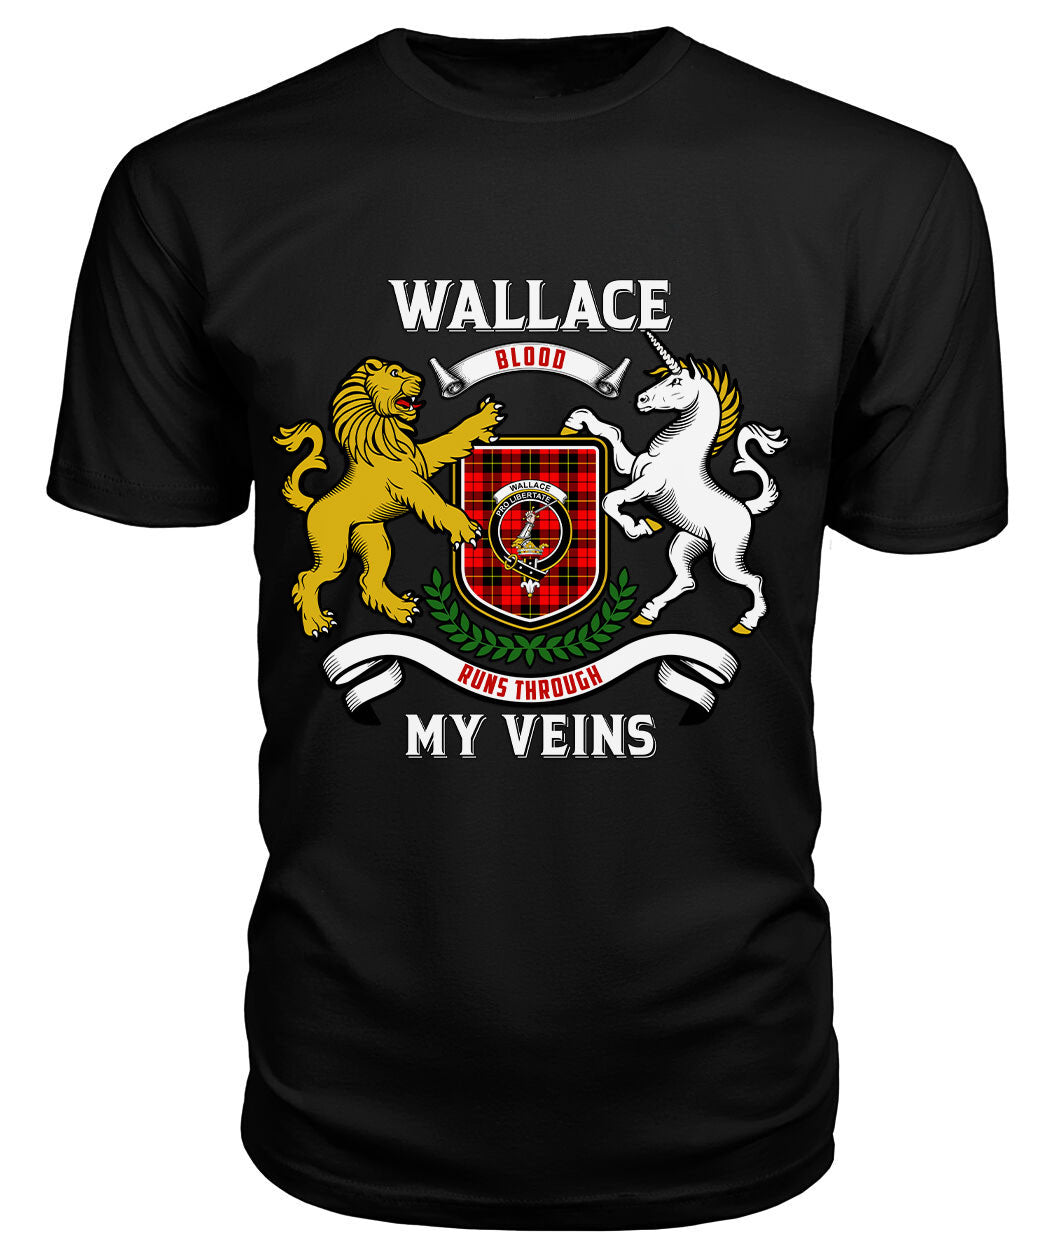 Wallace Hunting Red Tartan Crest 2D T-shirt - Blood Runs Through My Veins Style